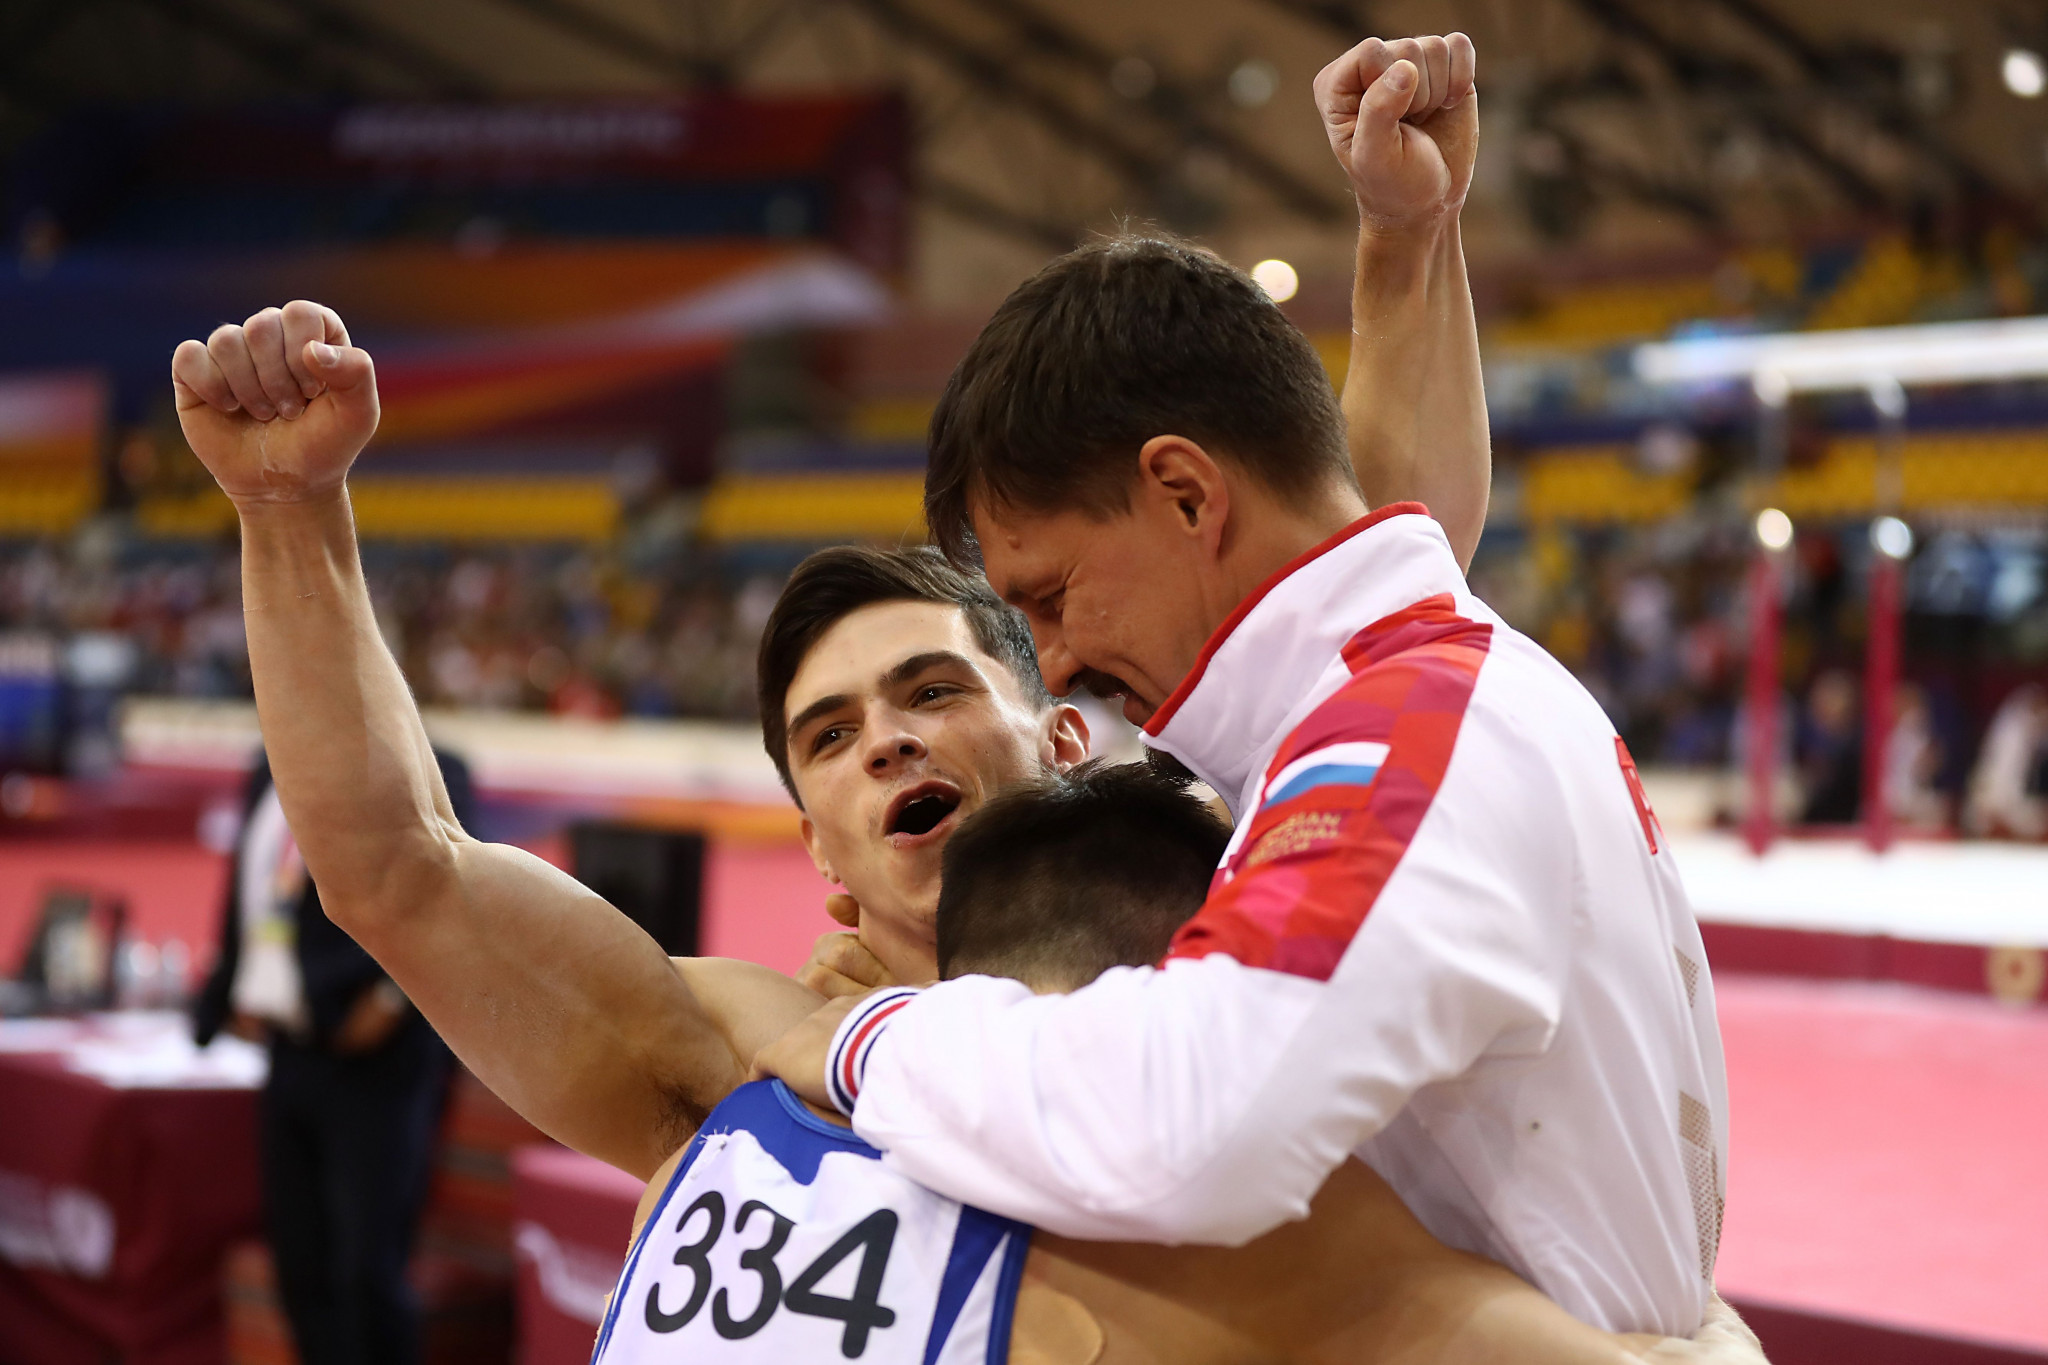 Dalaloyan dethrones defending champion in dramatic men's all-around final at Artistic Gymnastics World Championships